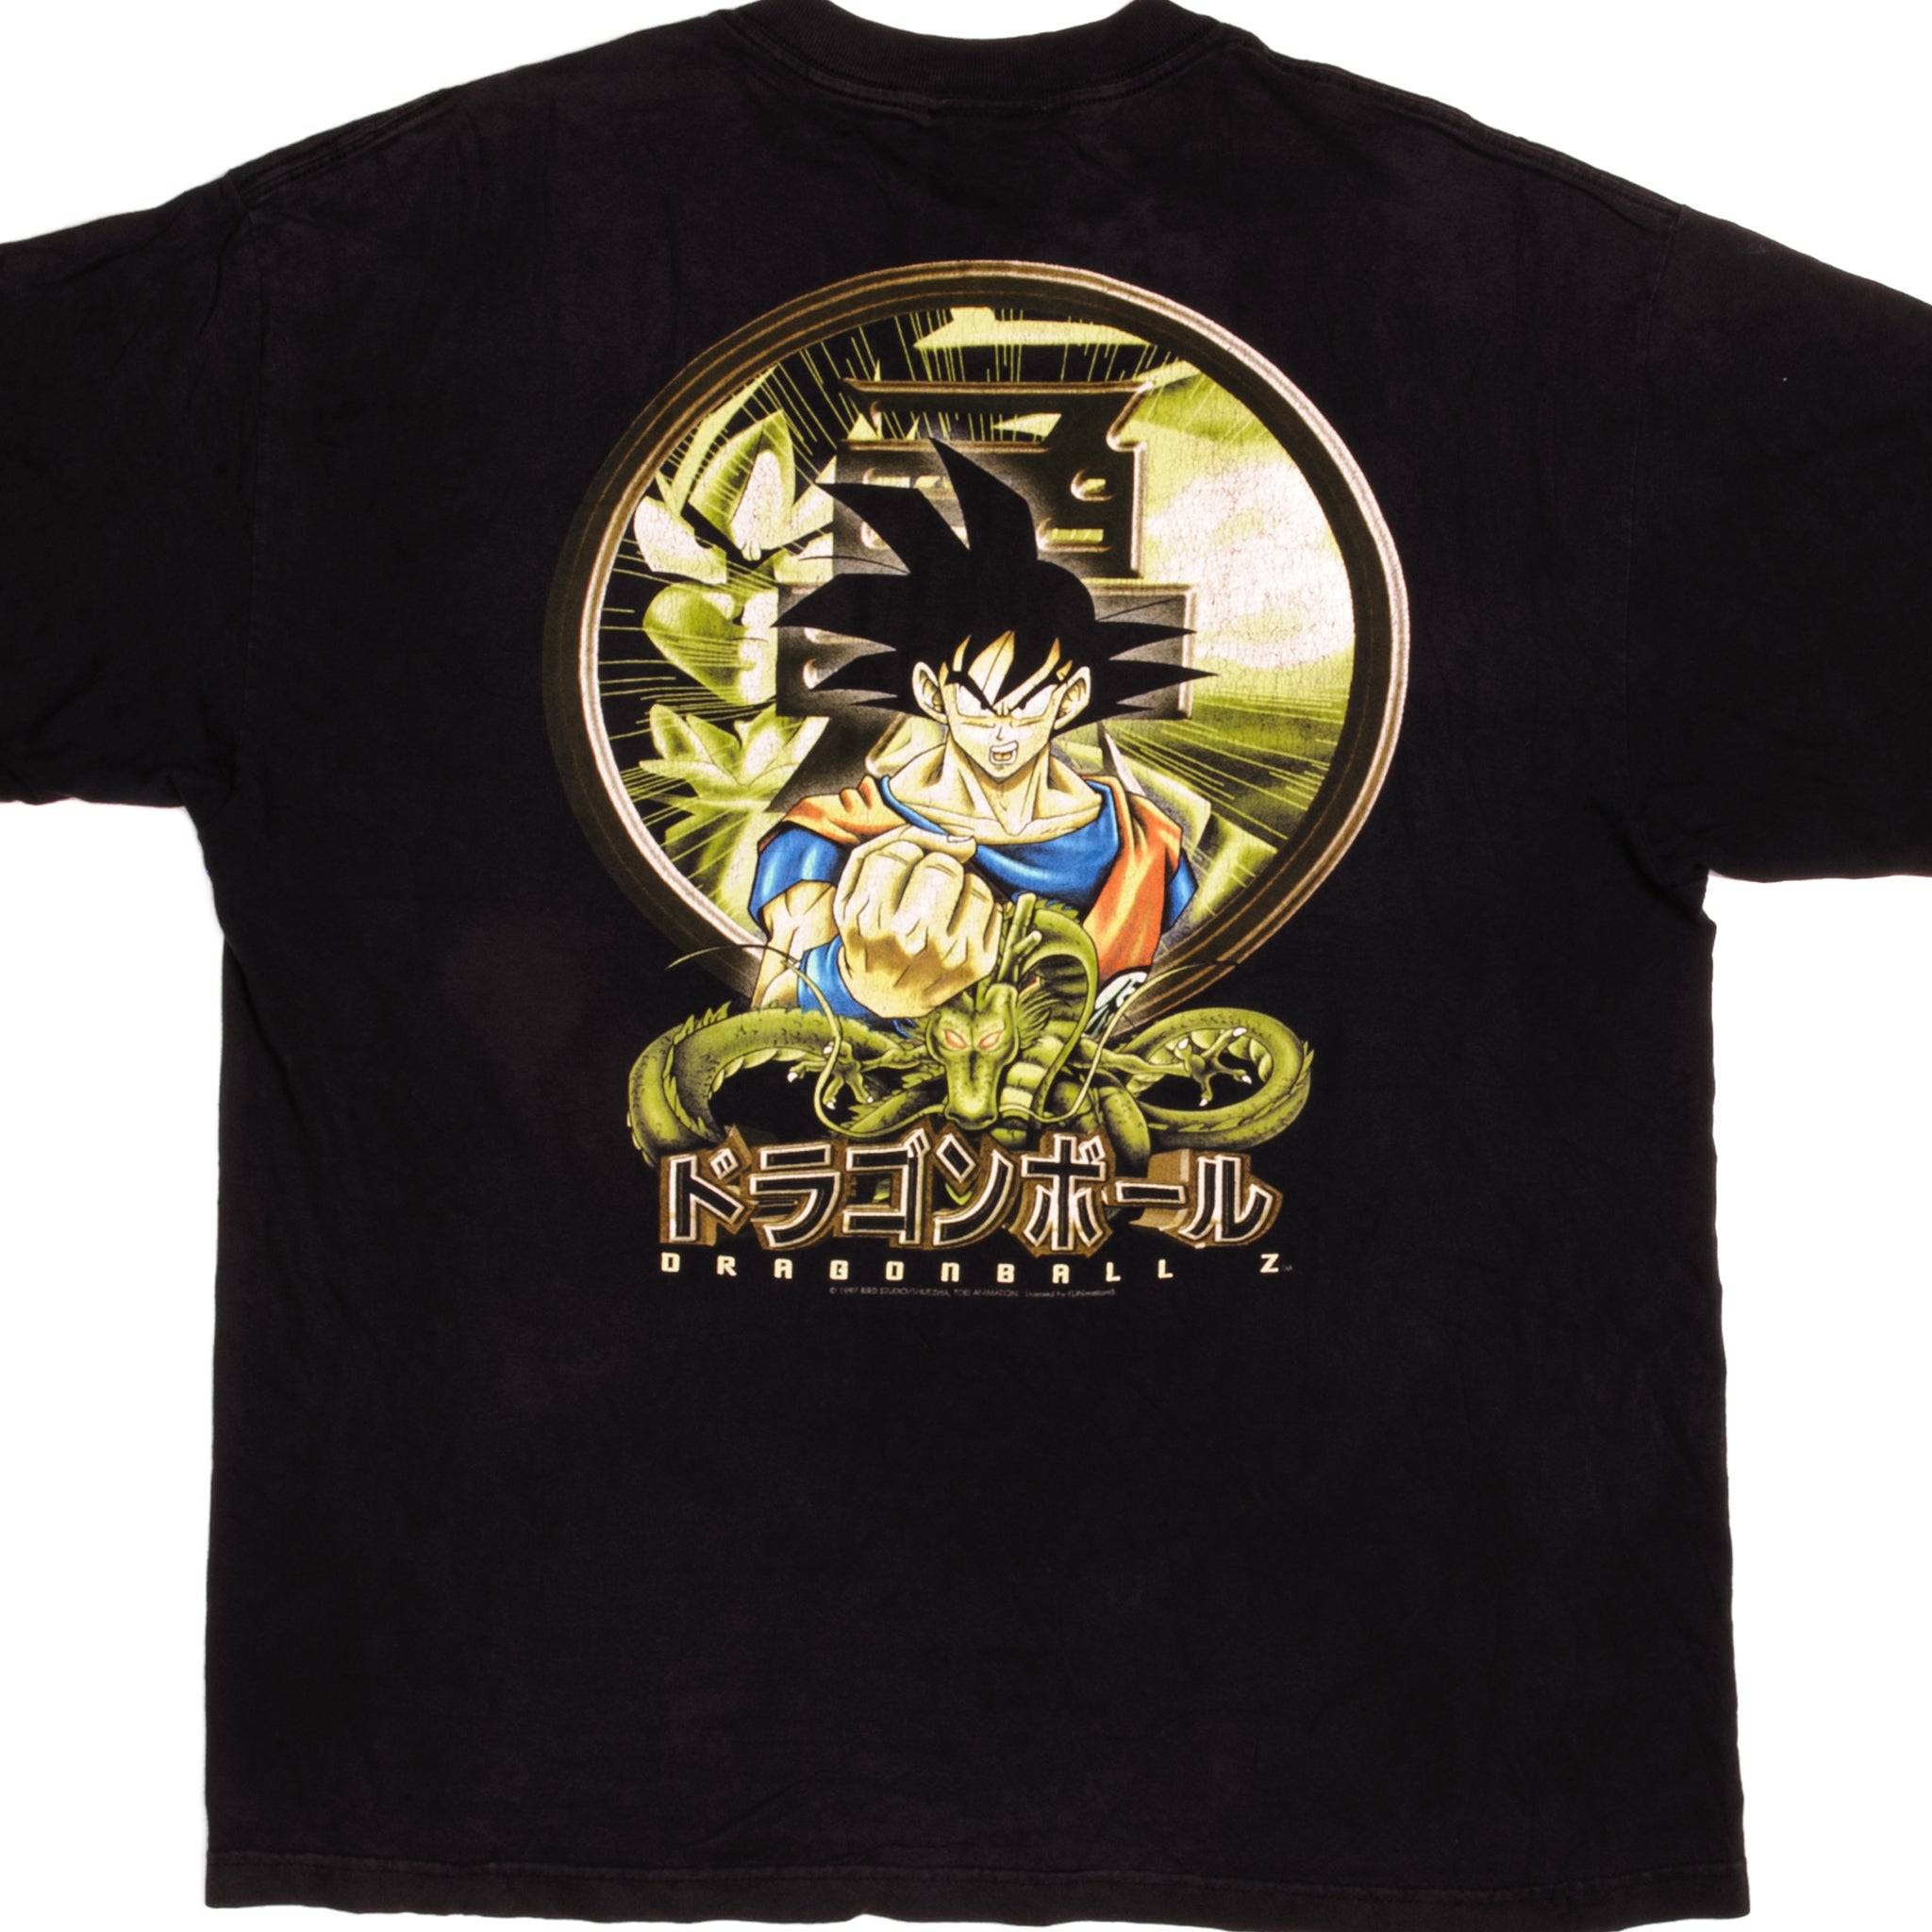 Vintage Dragon Ball Z Tee Shirt 2000 Size Medium – Vintage rare usa